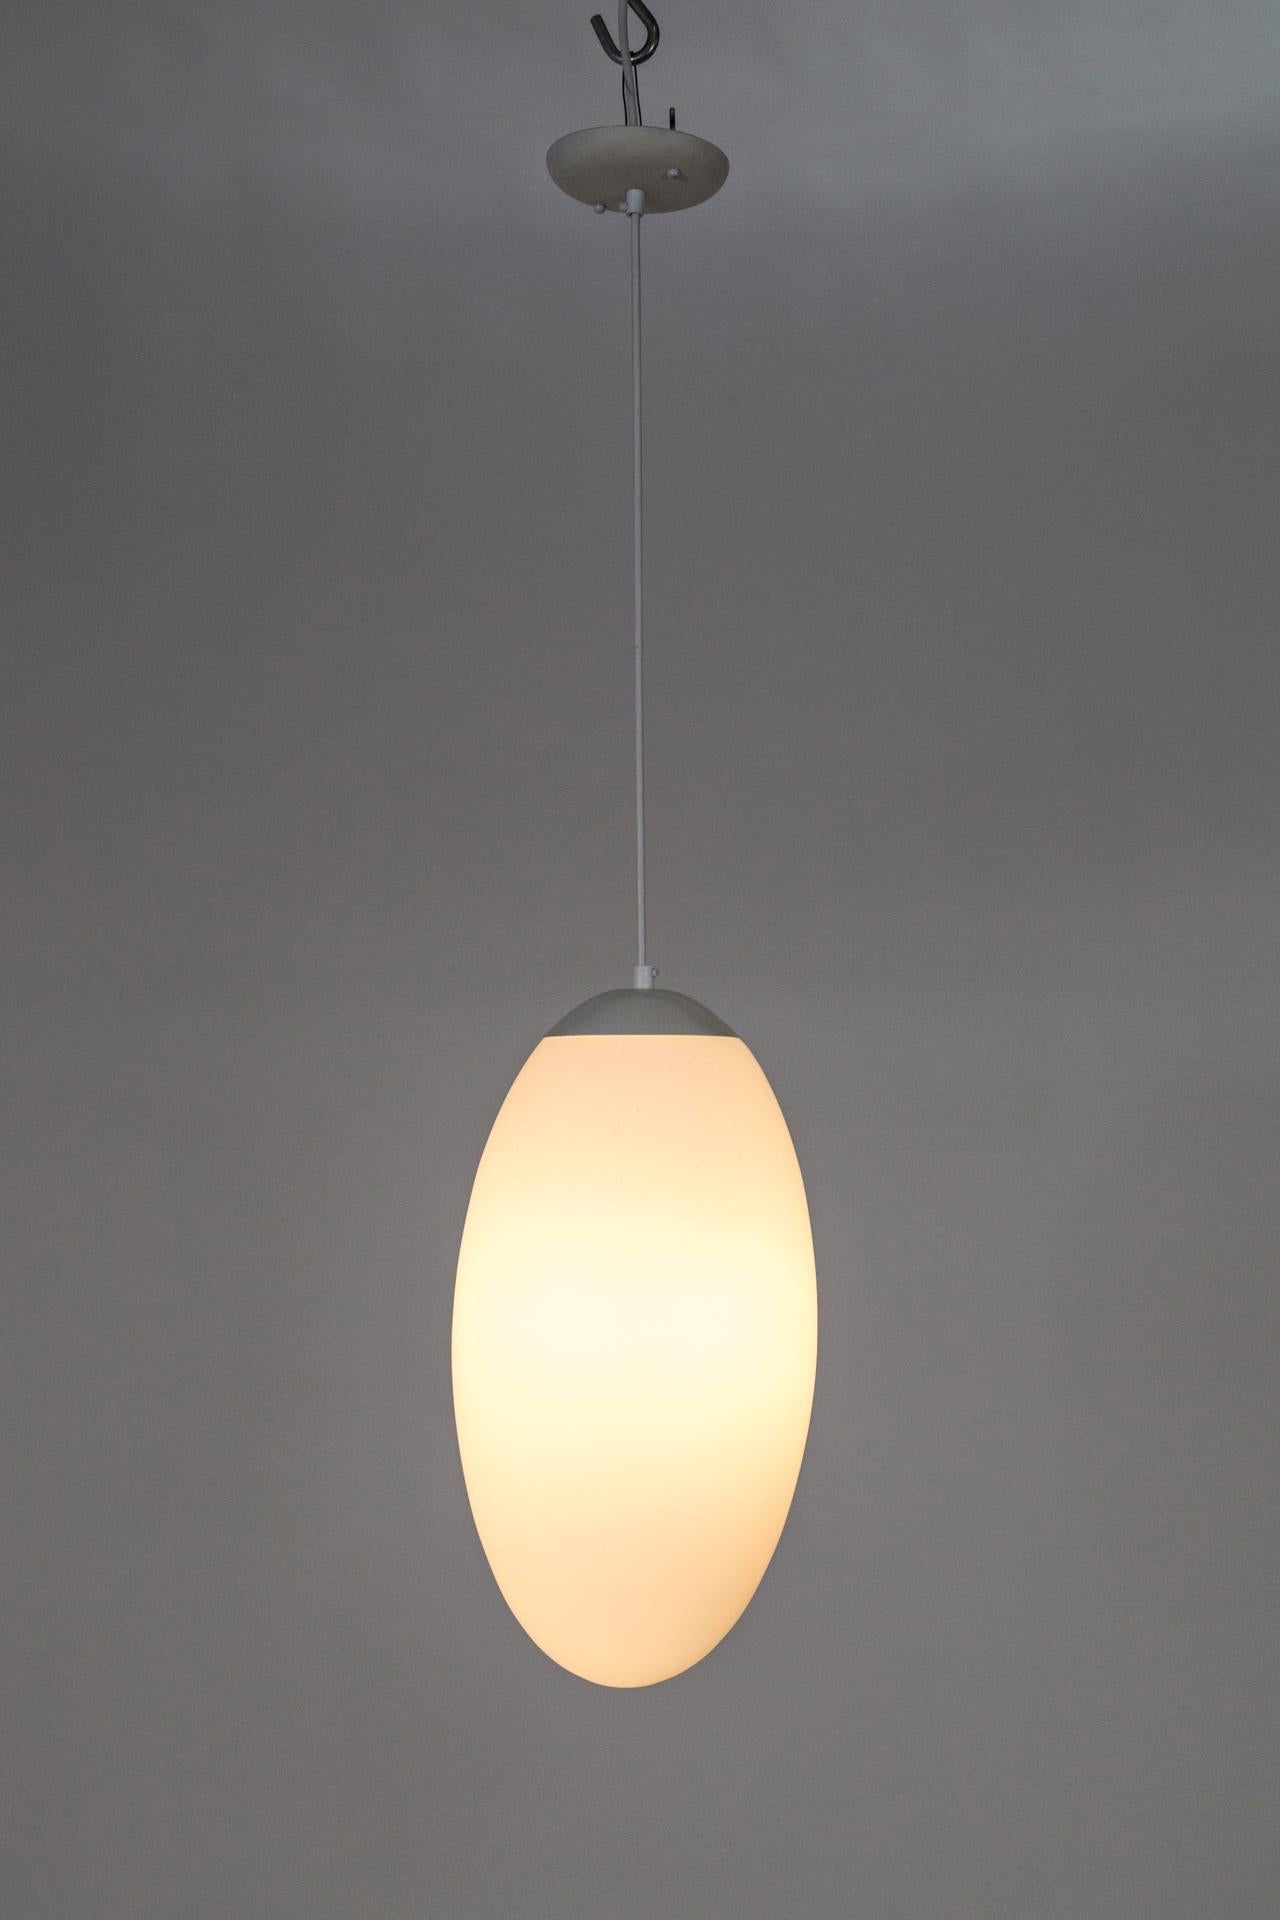 egg shaped pendant lights